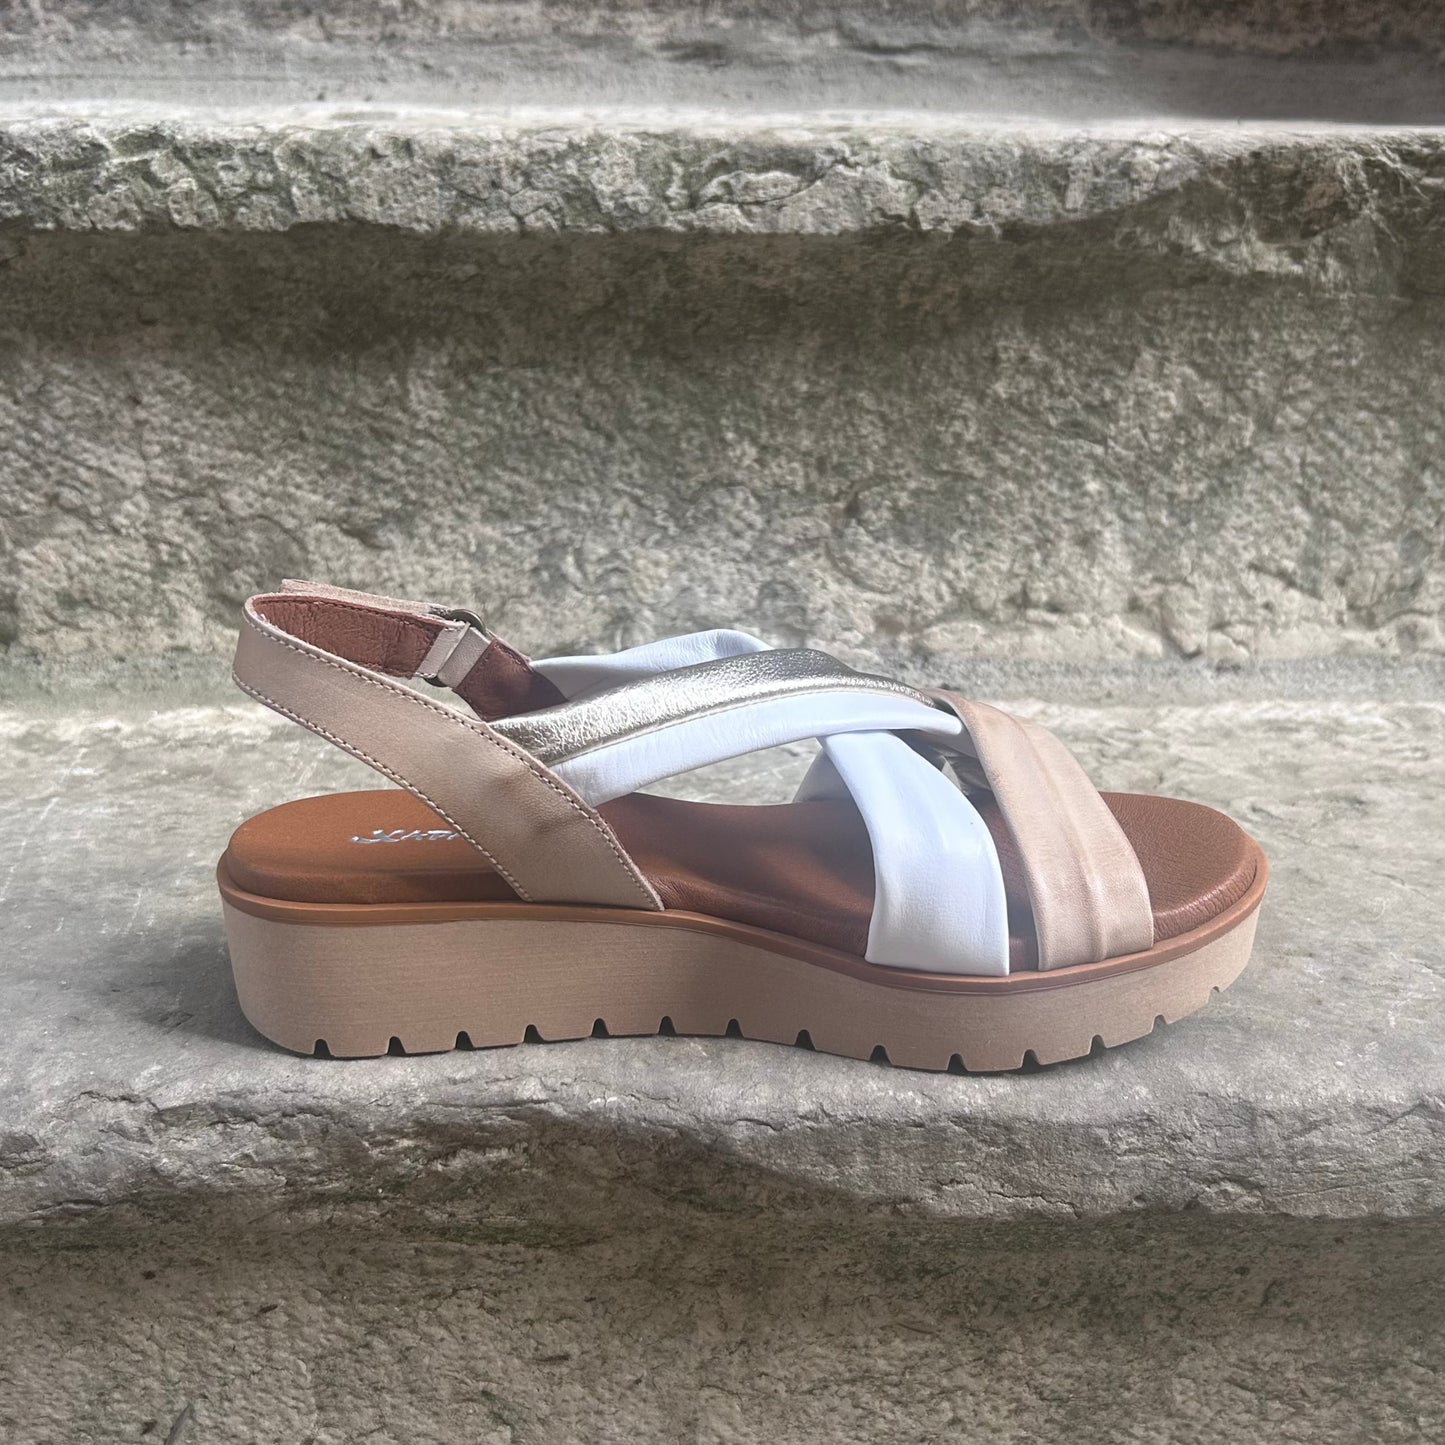 Sandale ultra confort blanc et beige 1832, XAPATAN